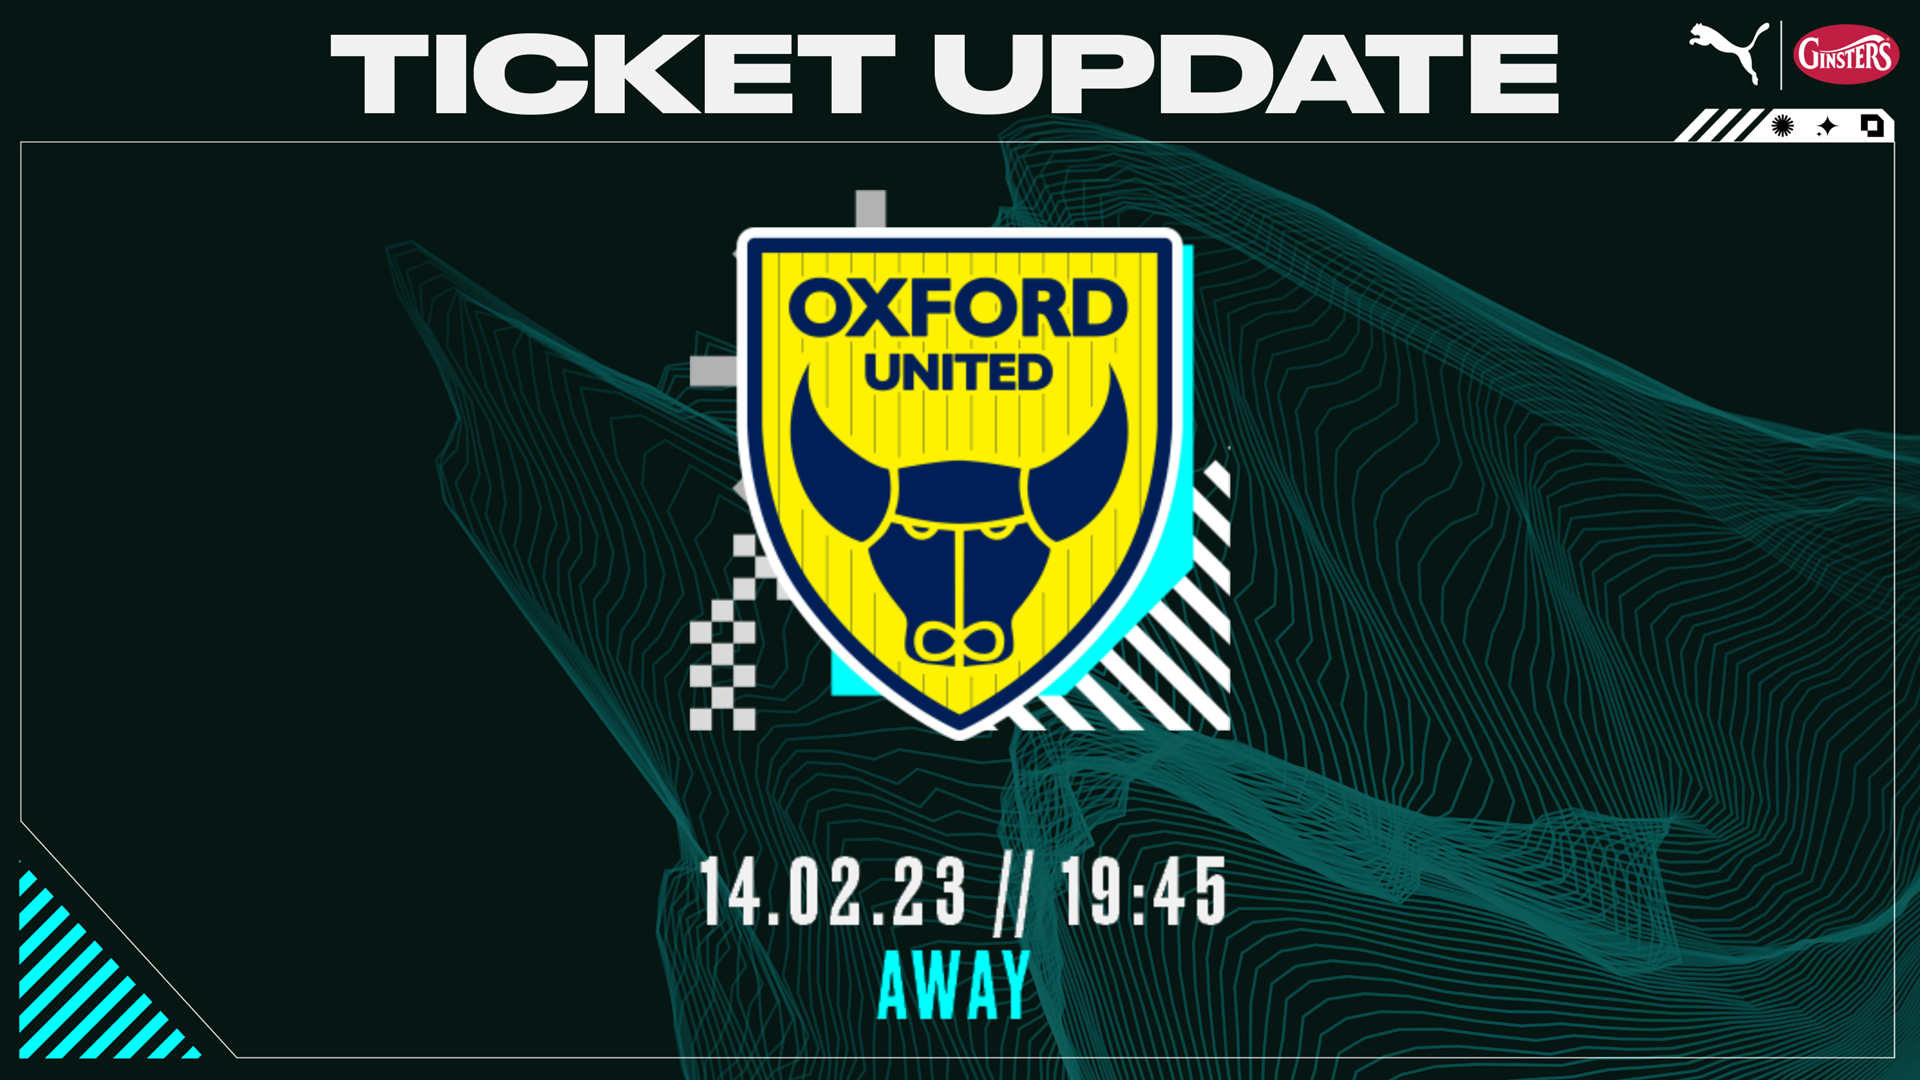 Oxford United Ticket Update